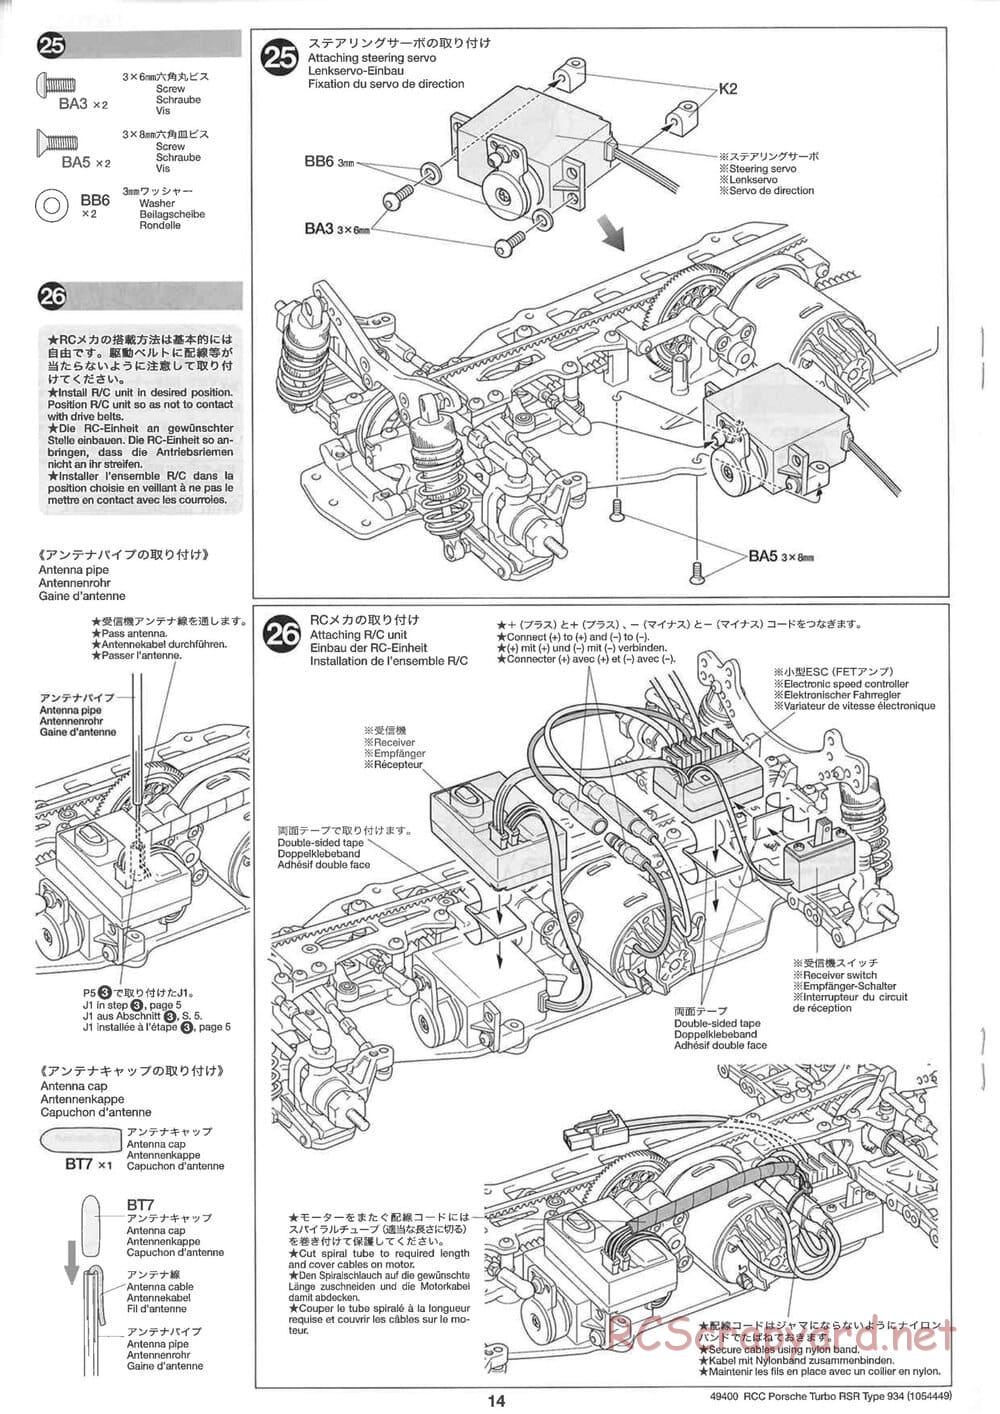 Tamiya - Porsche Turbo RSR Type 934 - TA05 Chassis - Manual - Page 14